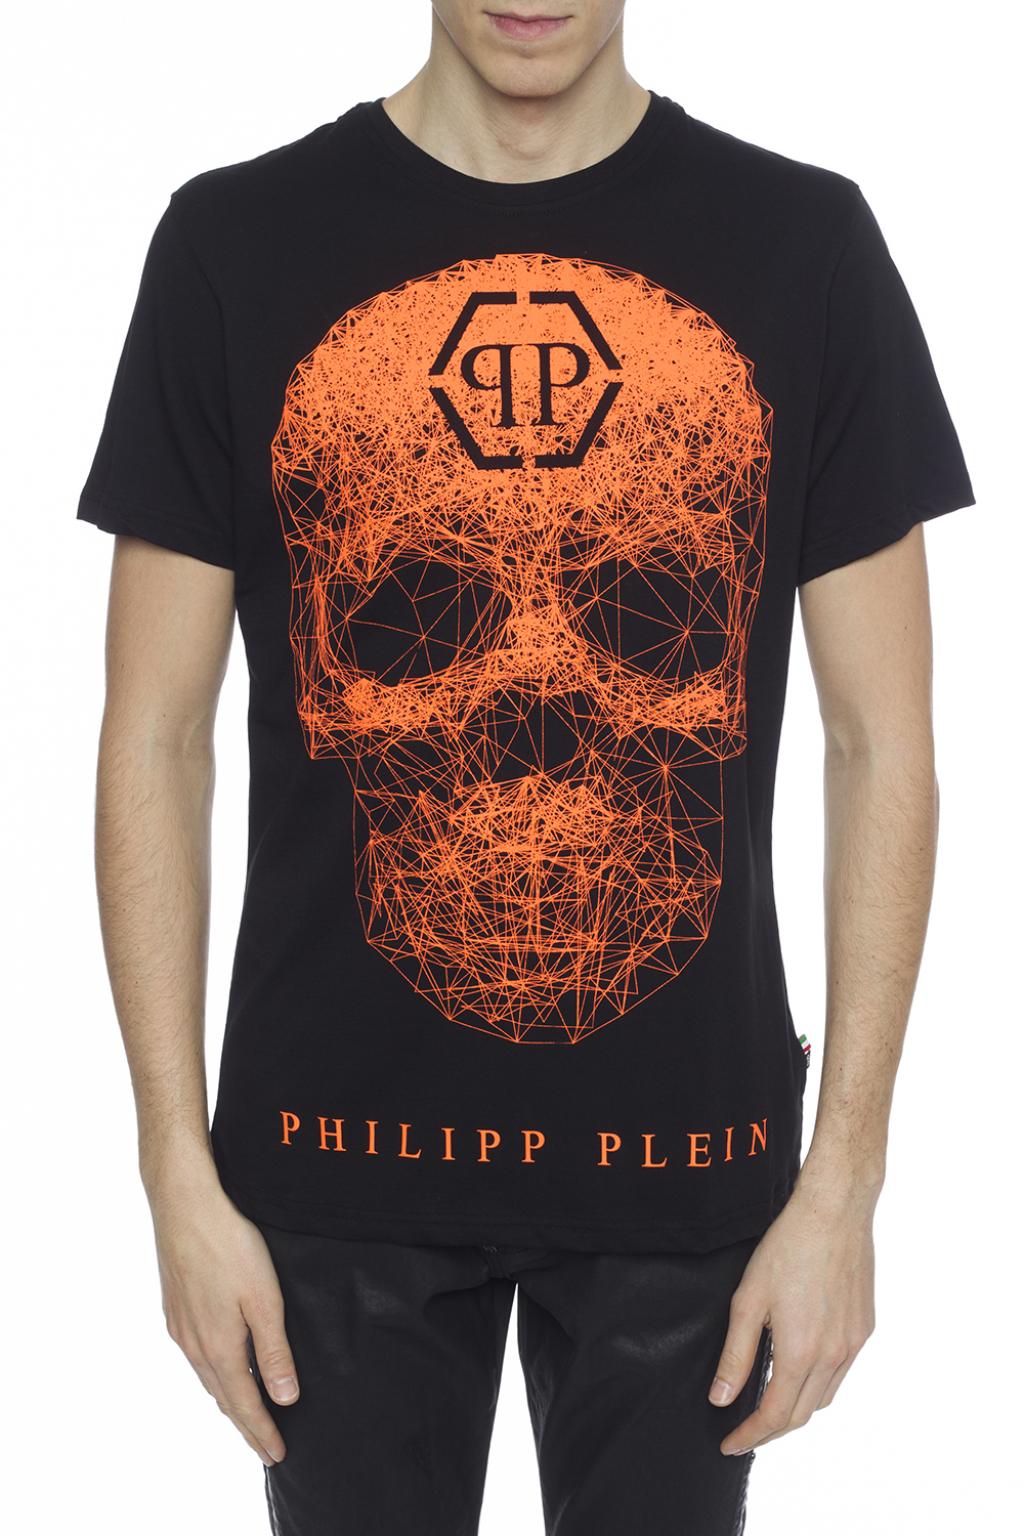 philipp plein gold skull t shirt